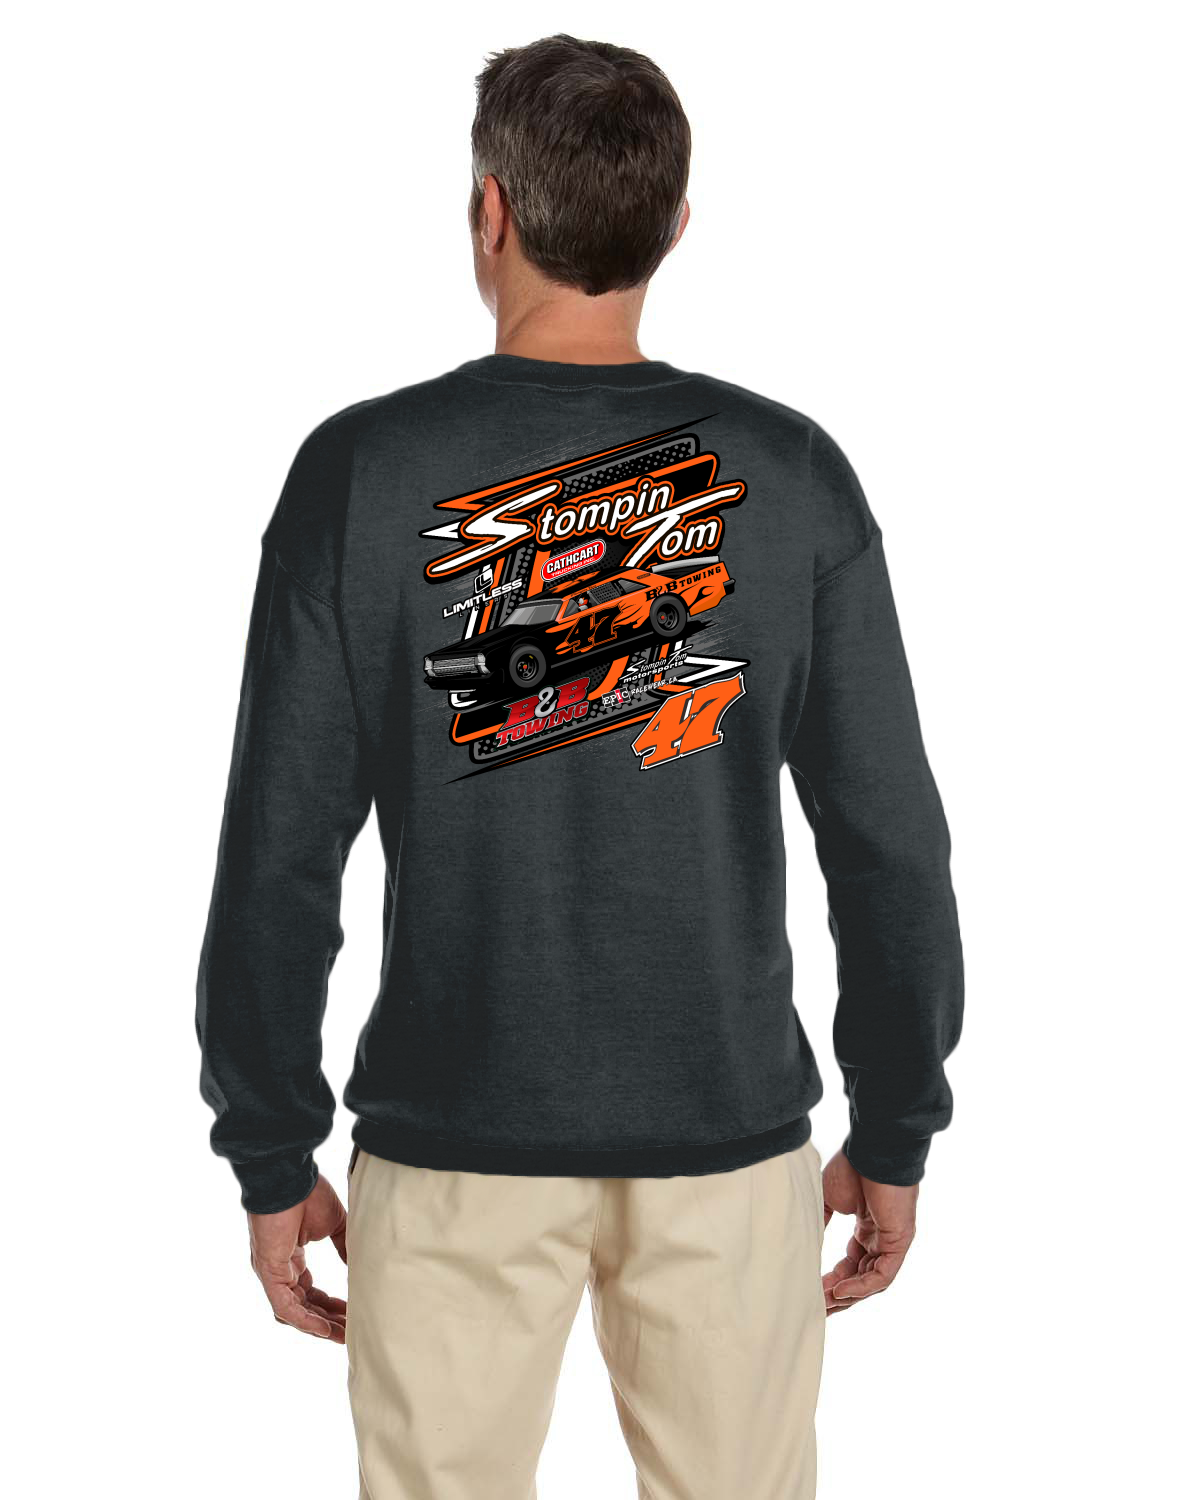 Stompin Tom Walters Racing Crew neck sweater